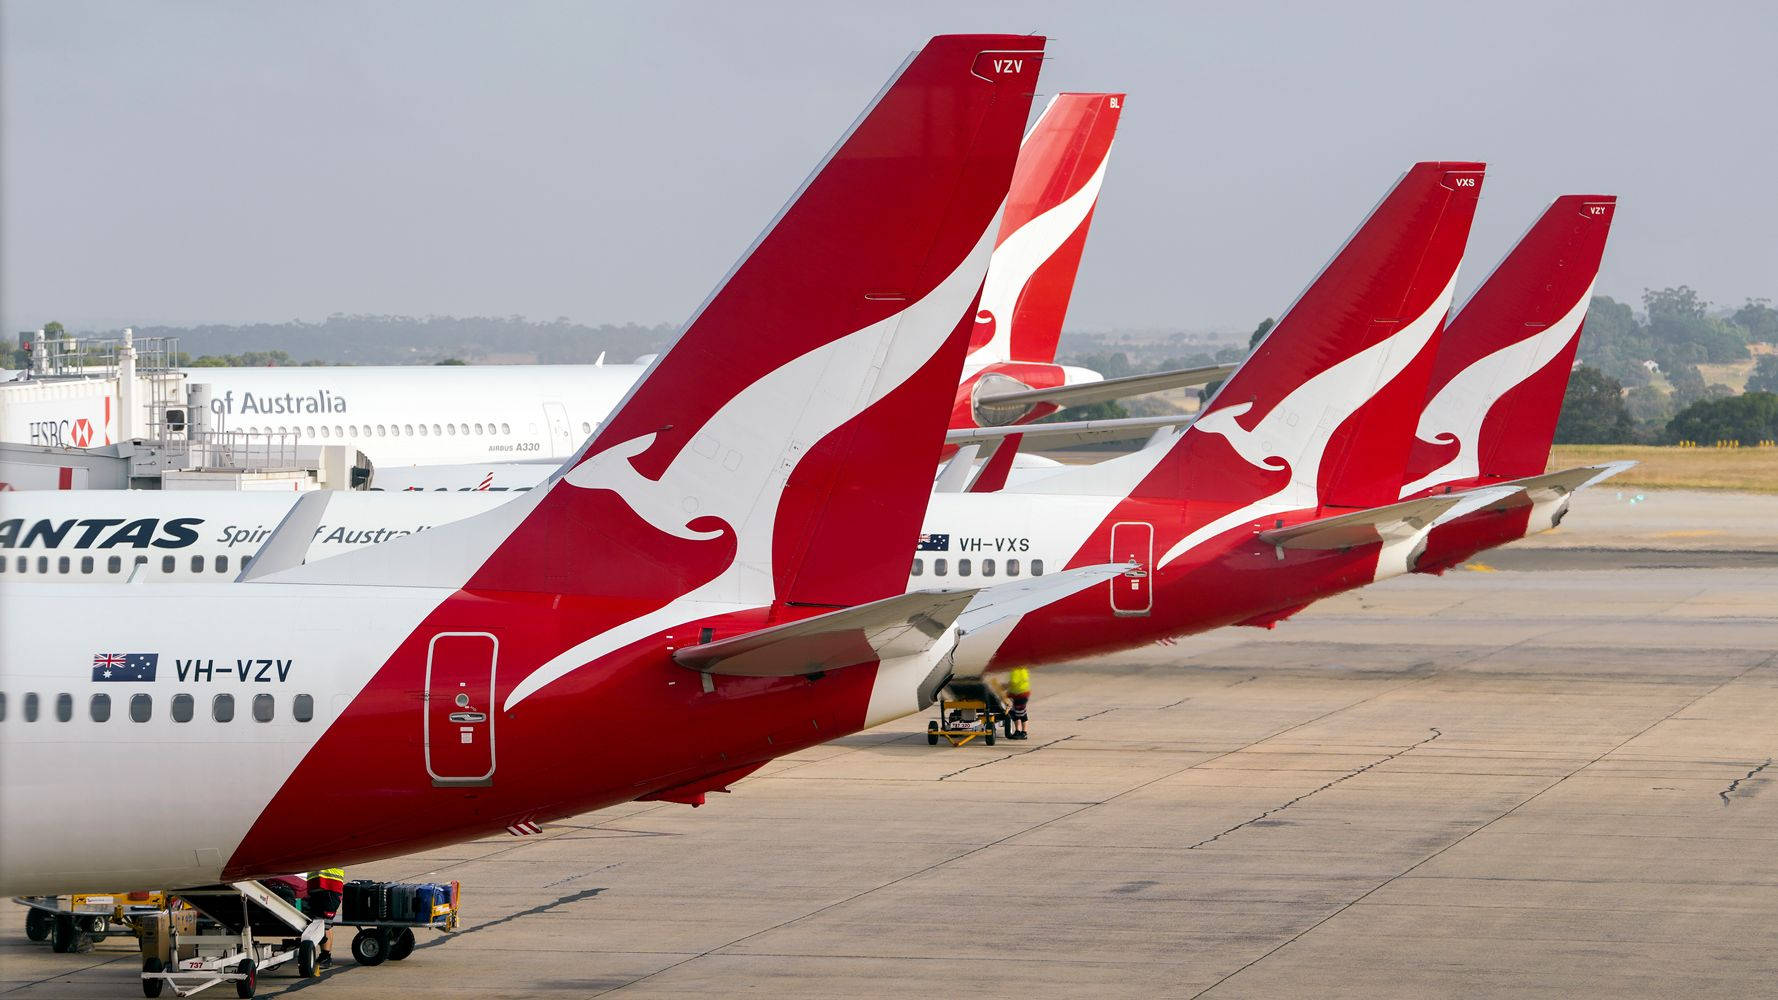 Qantas Airplanes Red Tails Wallpaper